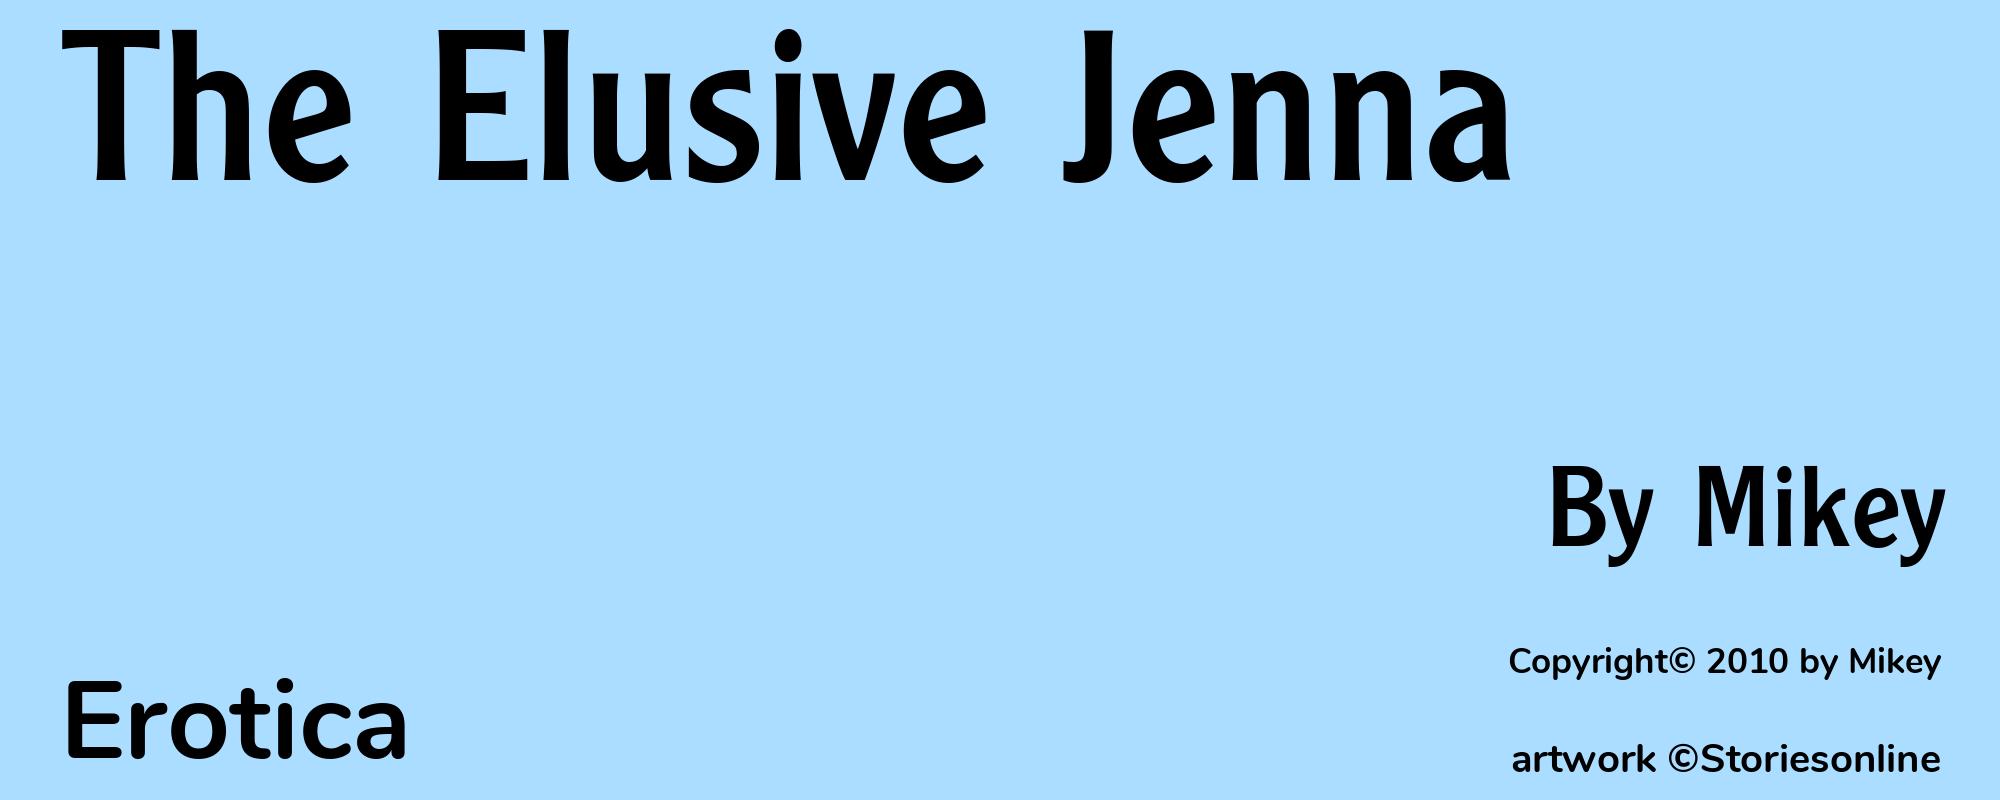 The Elusive Jenna - Cover